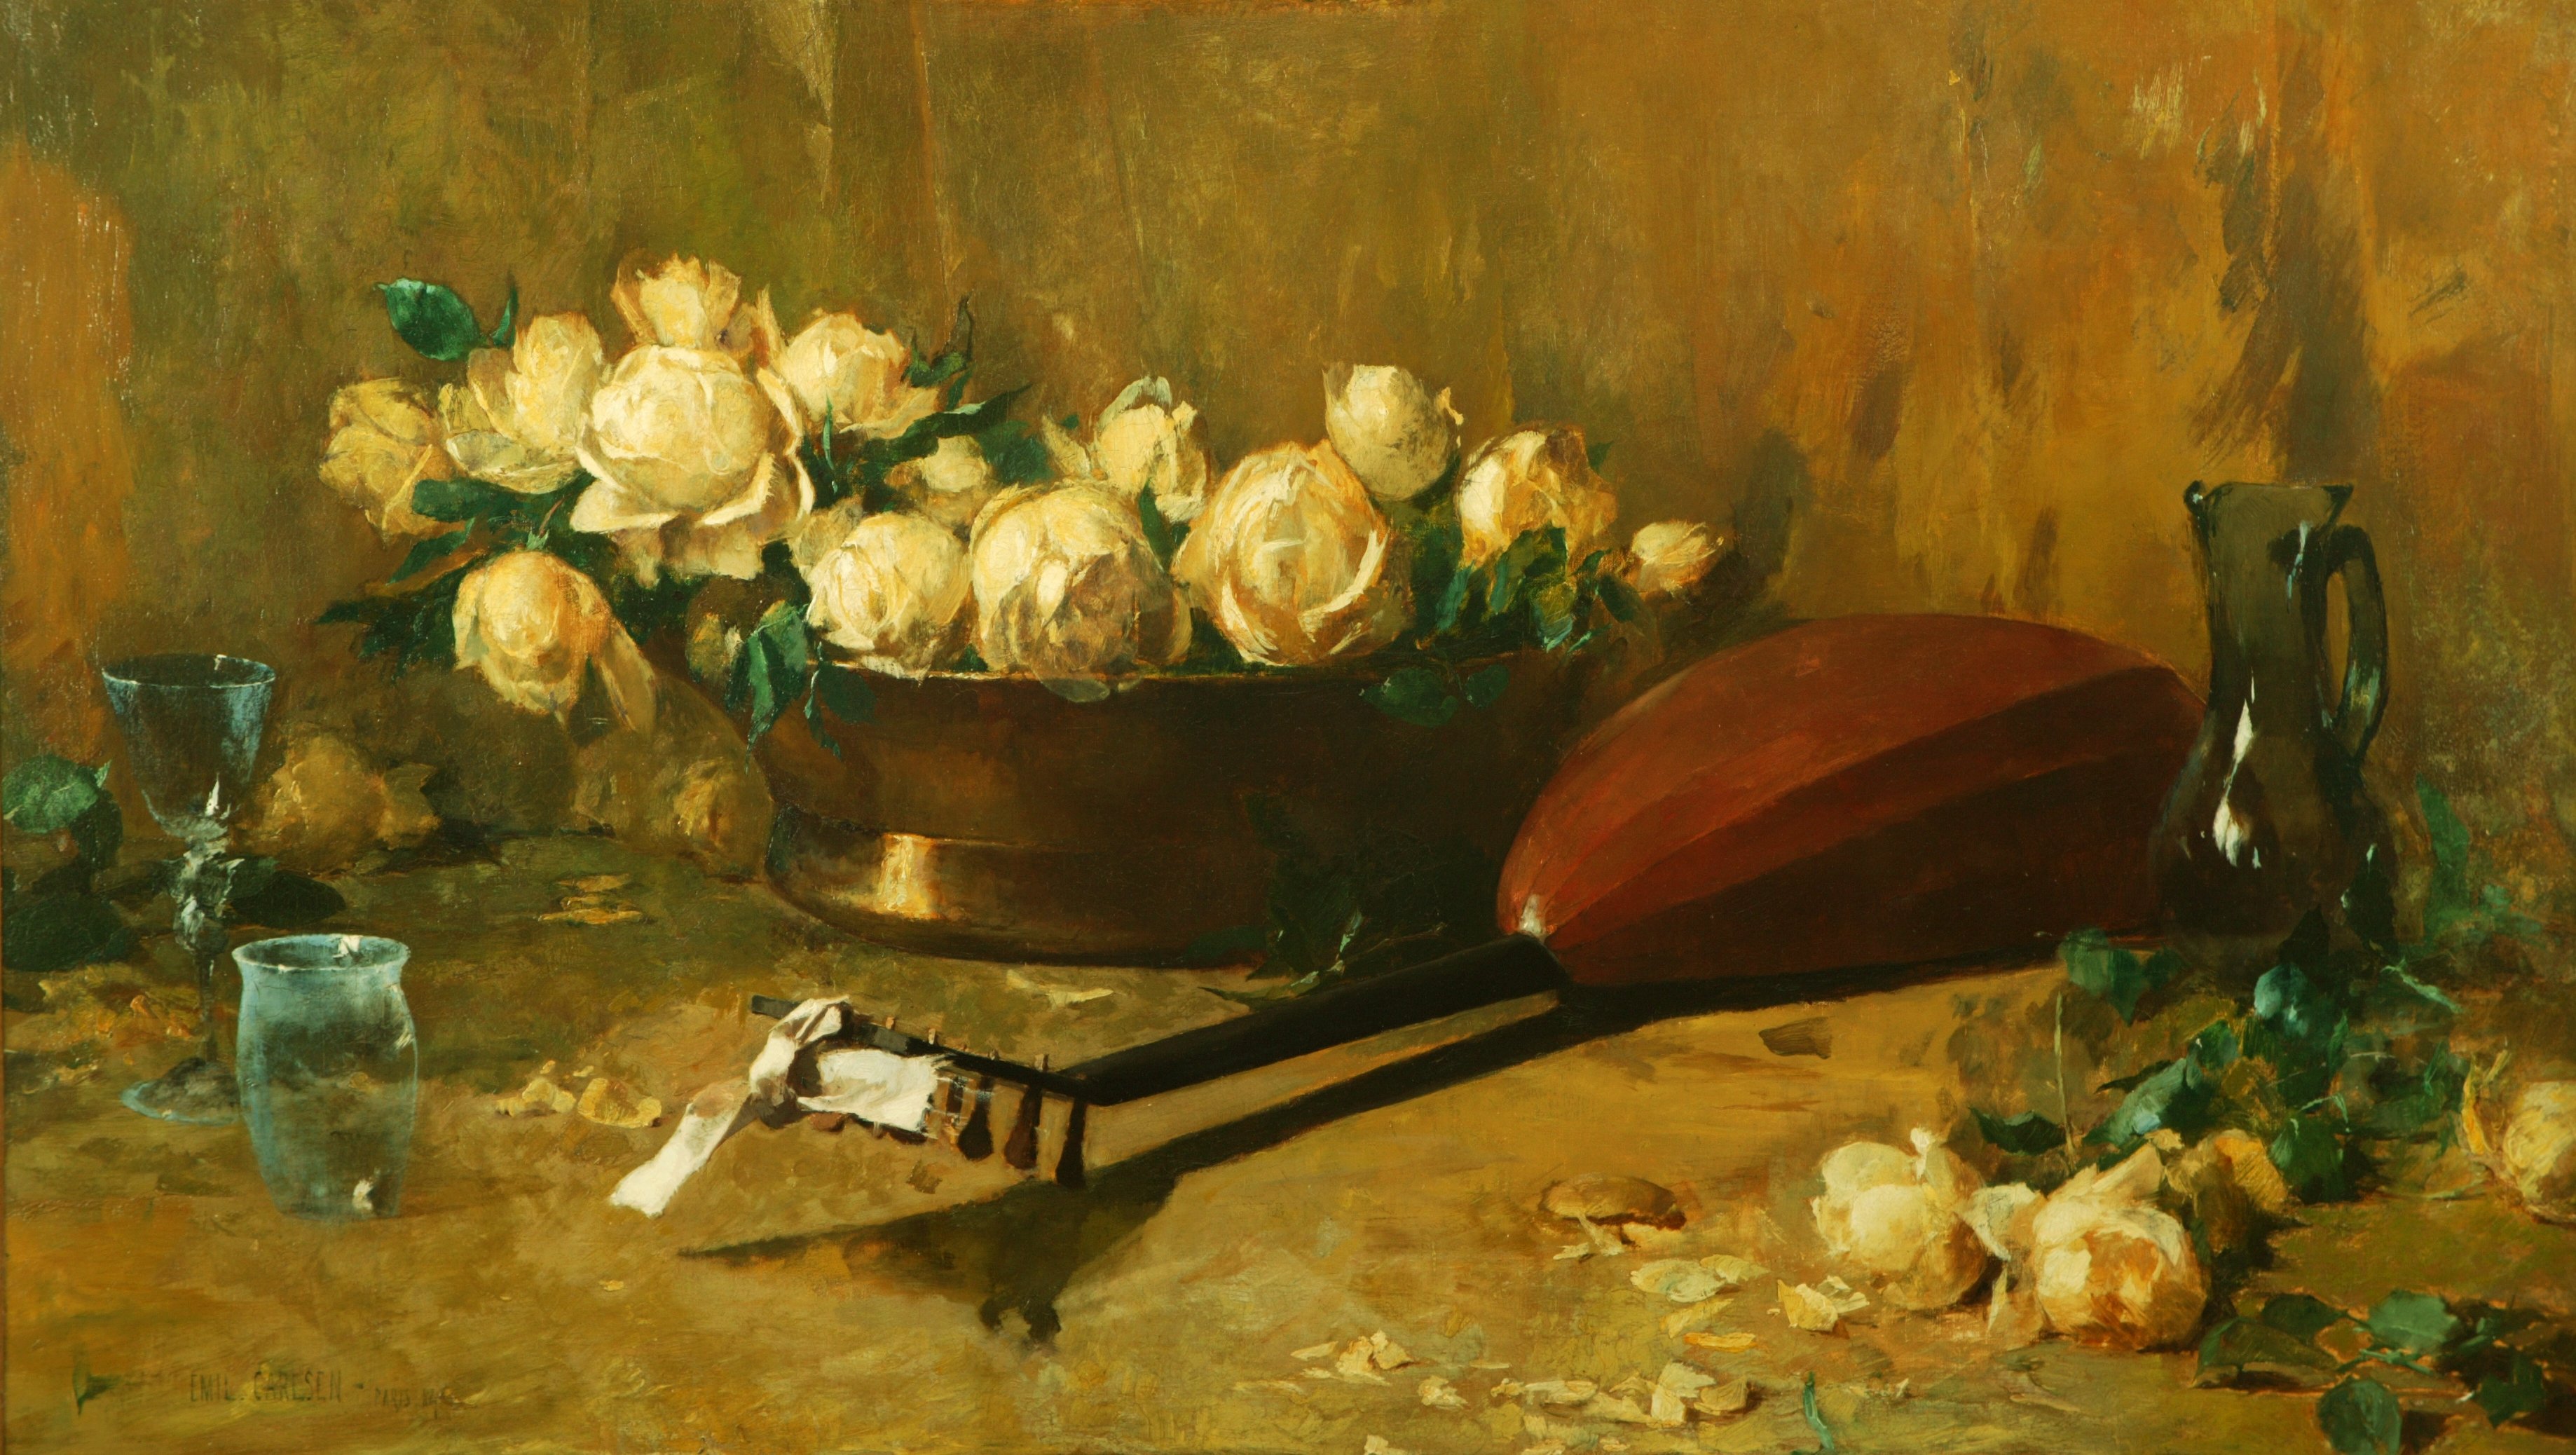 Emil Carlsen : Still life with roses and mandolin, 1884.